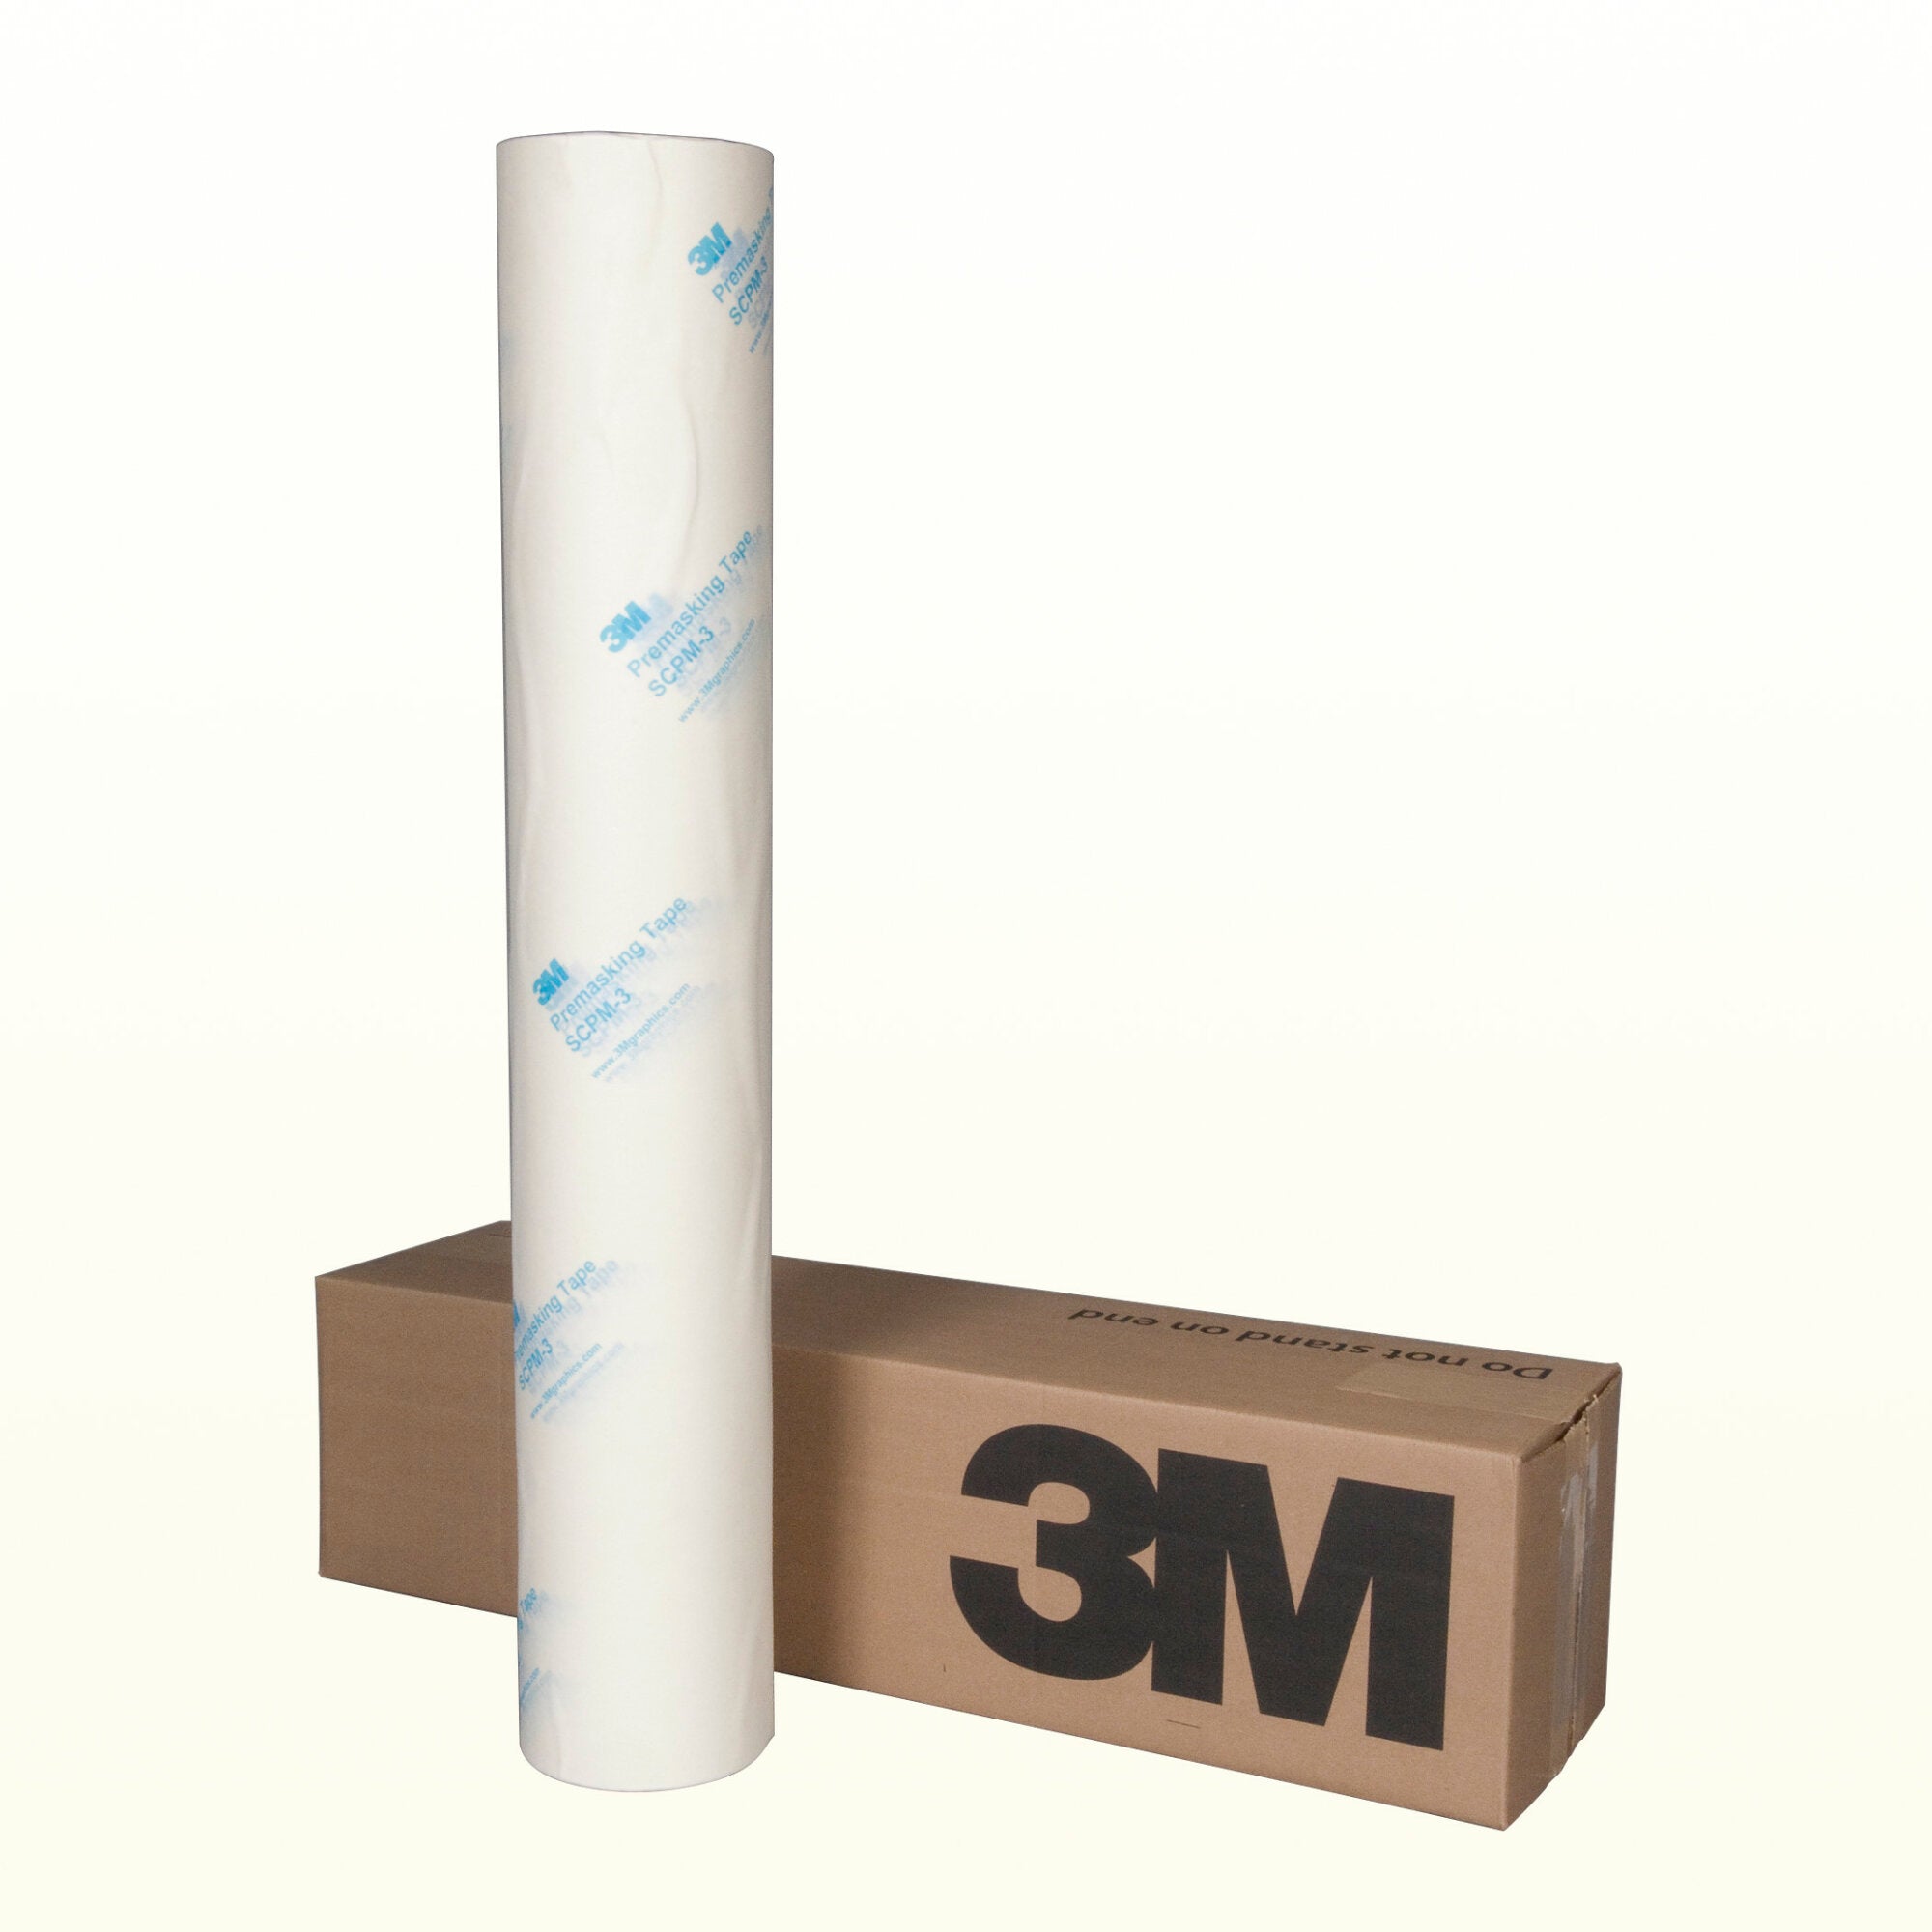 3M Premasking Tape SCPM-3, 24 in x 250 yd